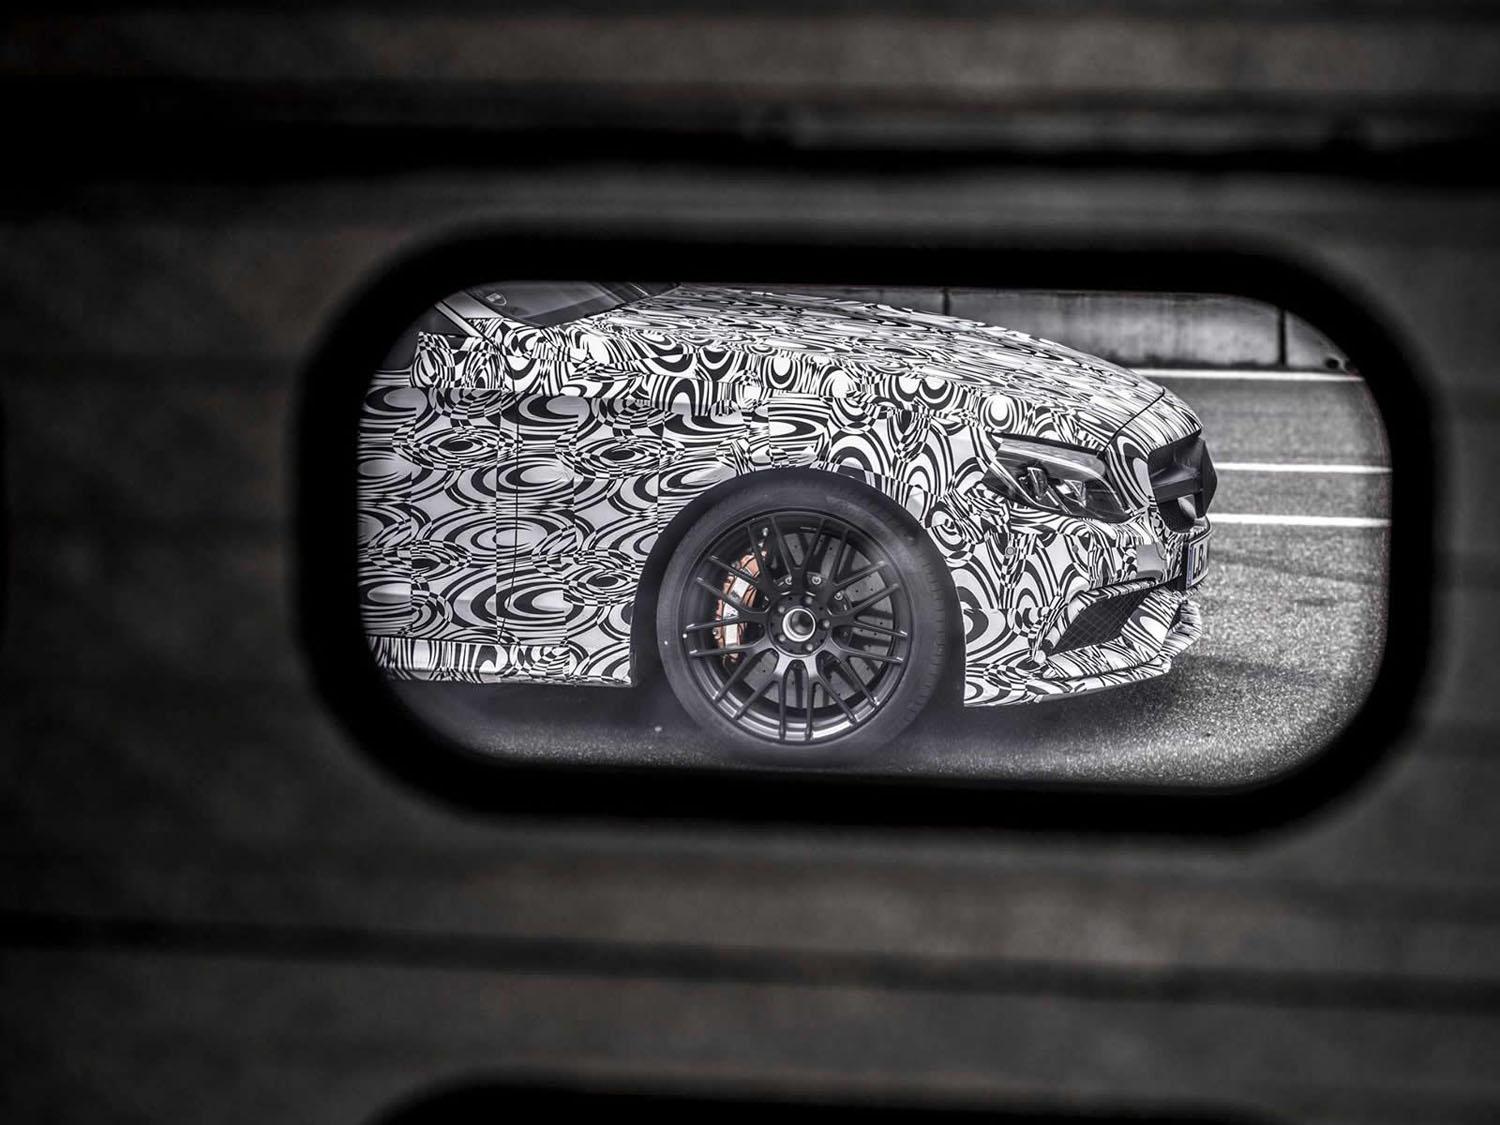 Mercedes-AMG C63 Coupe teaser